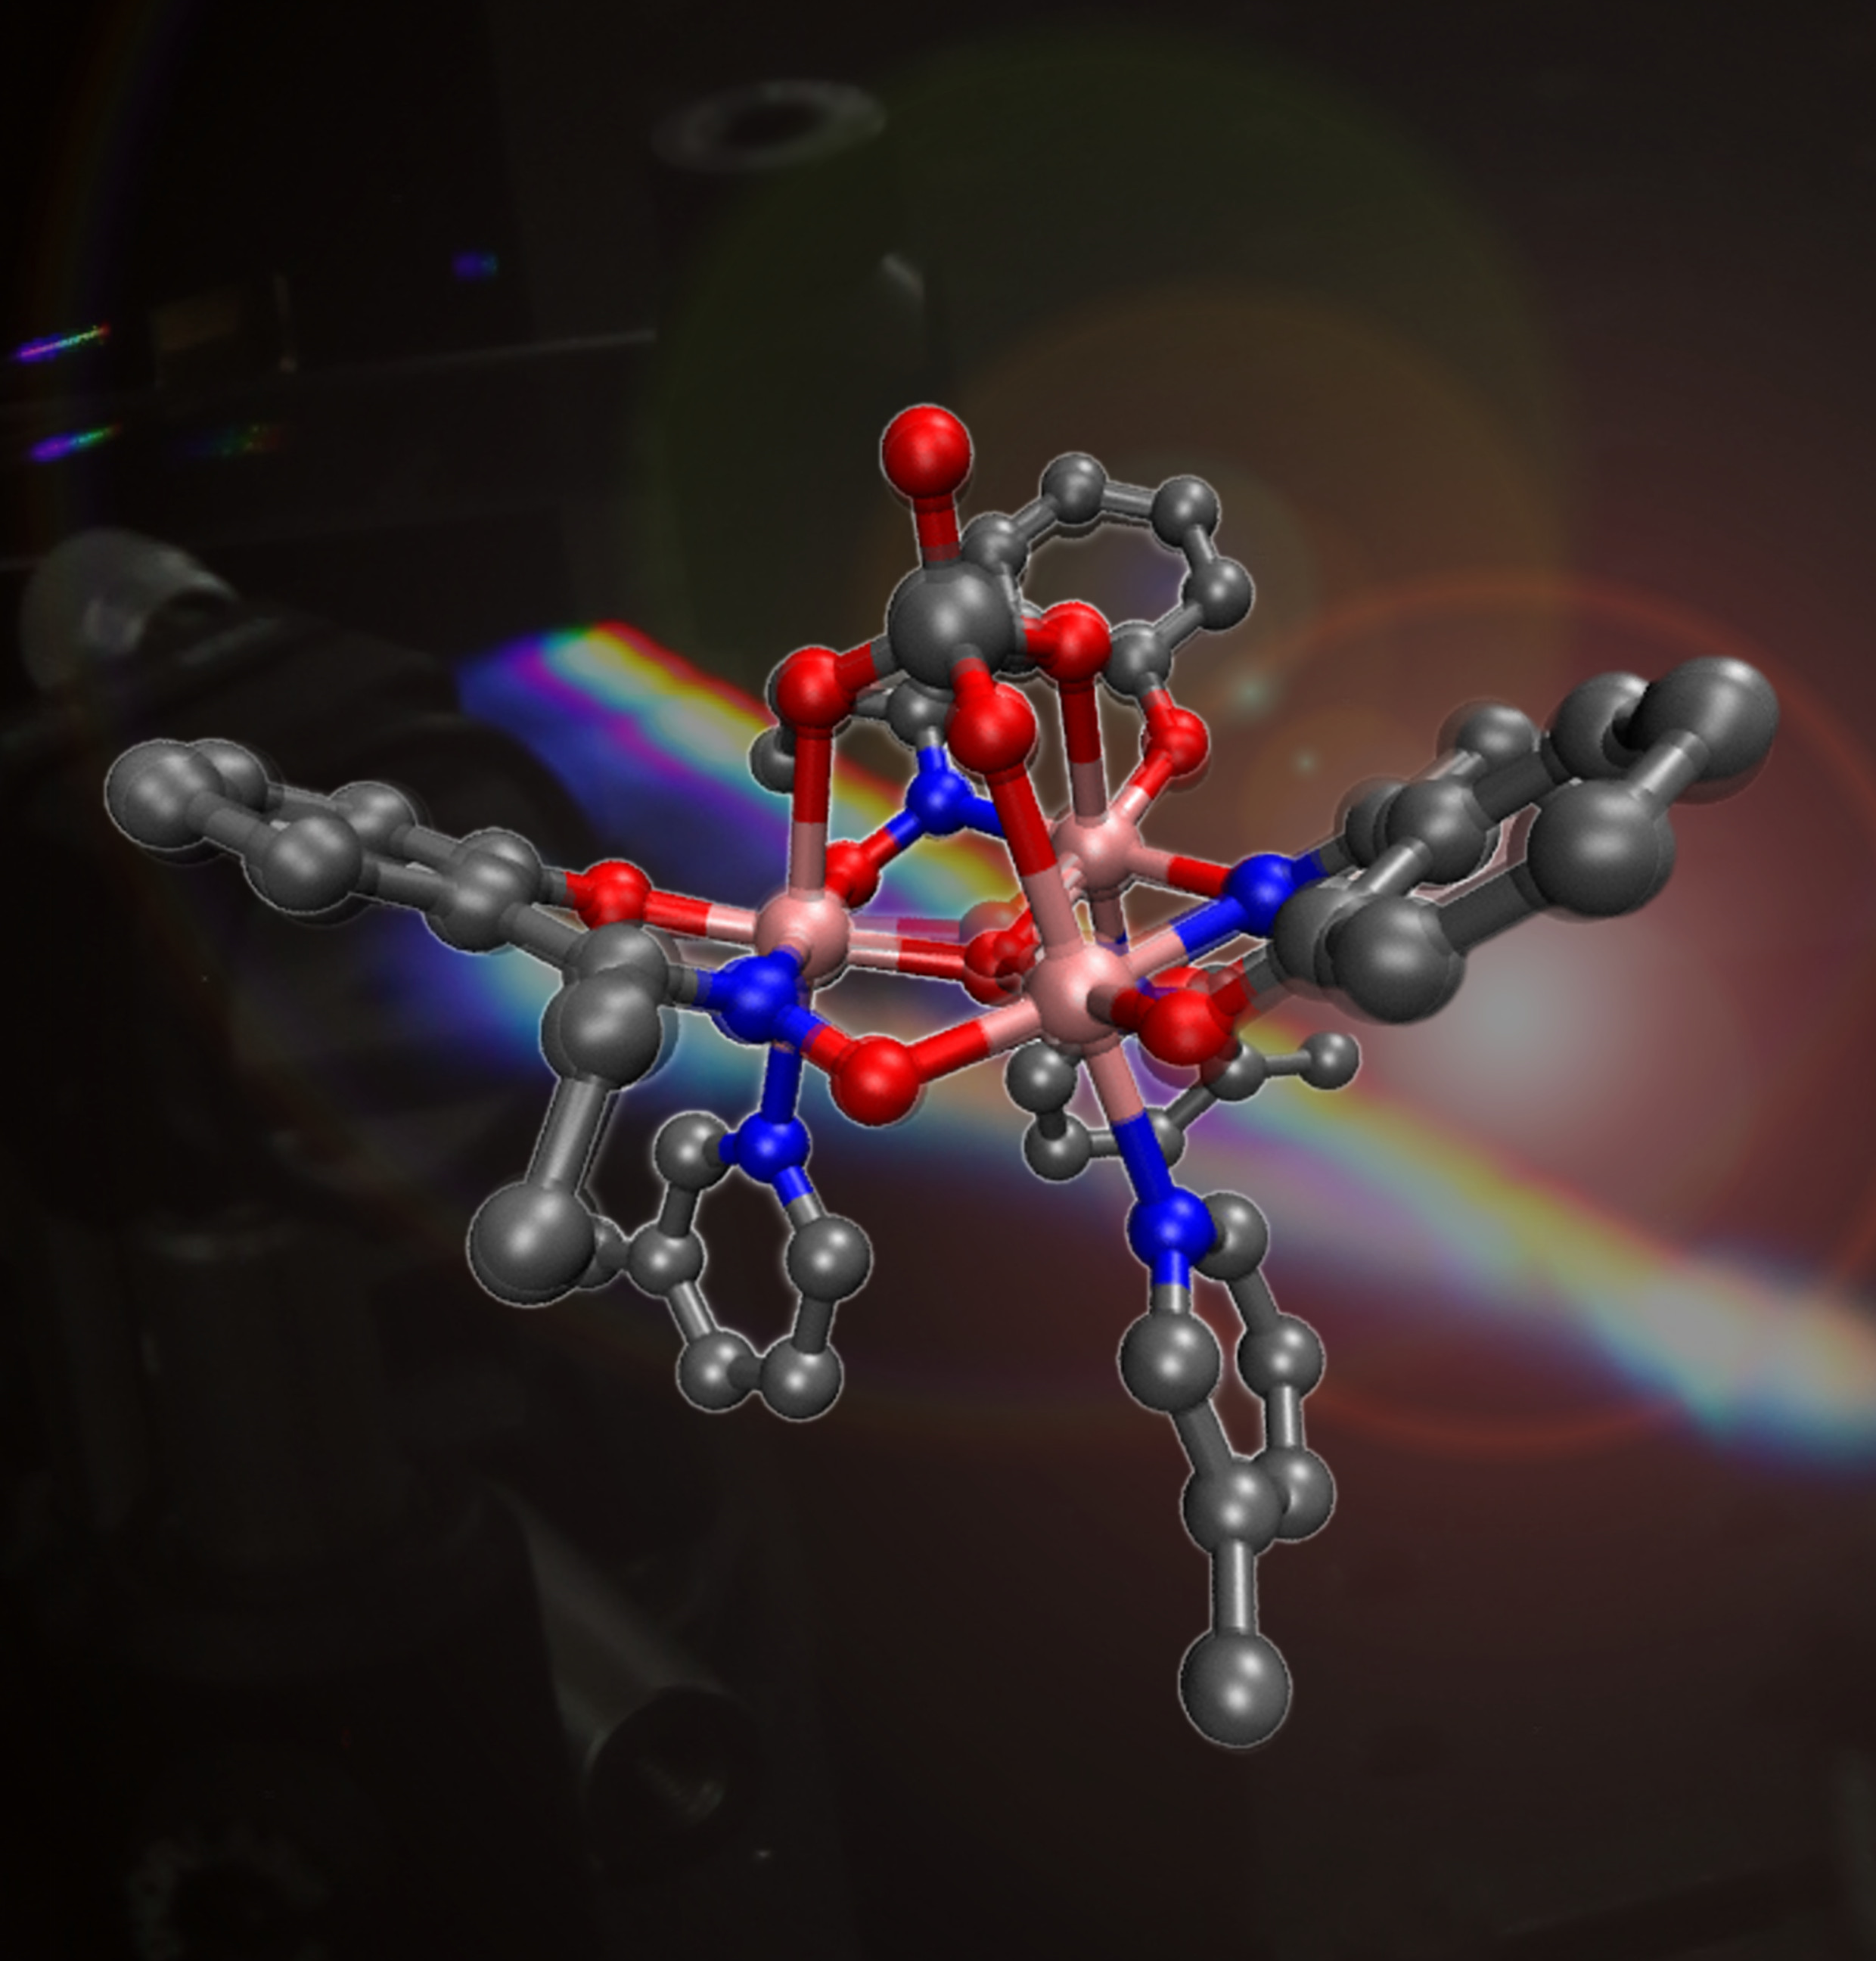 Image of a single-molecule magnet